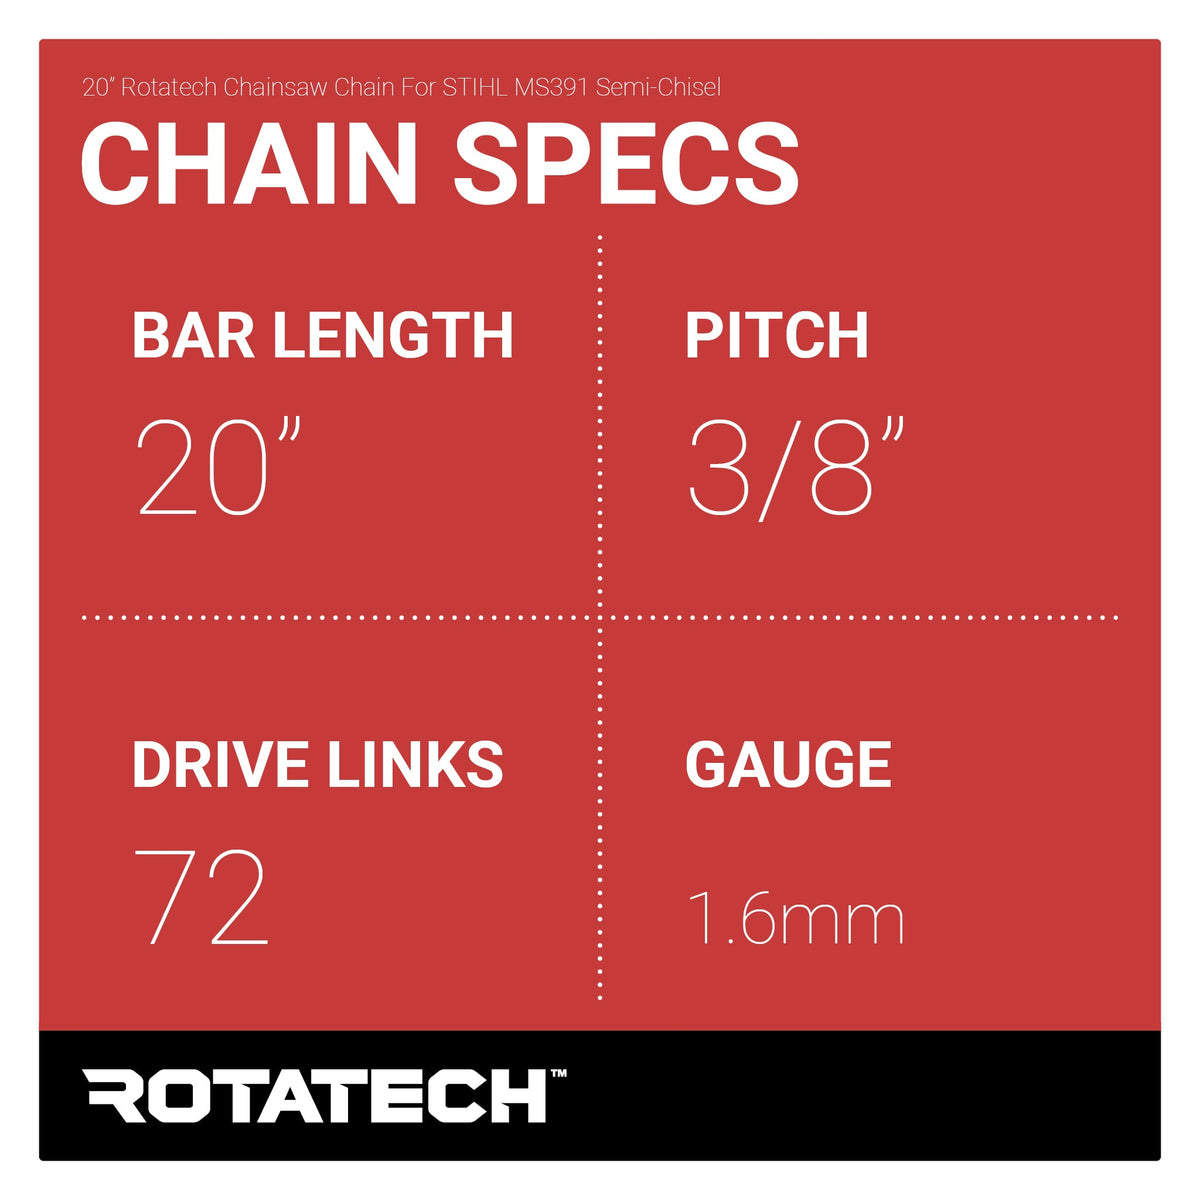 20" Rotatech Chainsaw Chain For STIHL MS391 Semi-Chisel Chain Specs